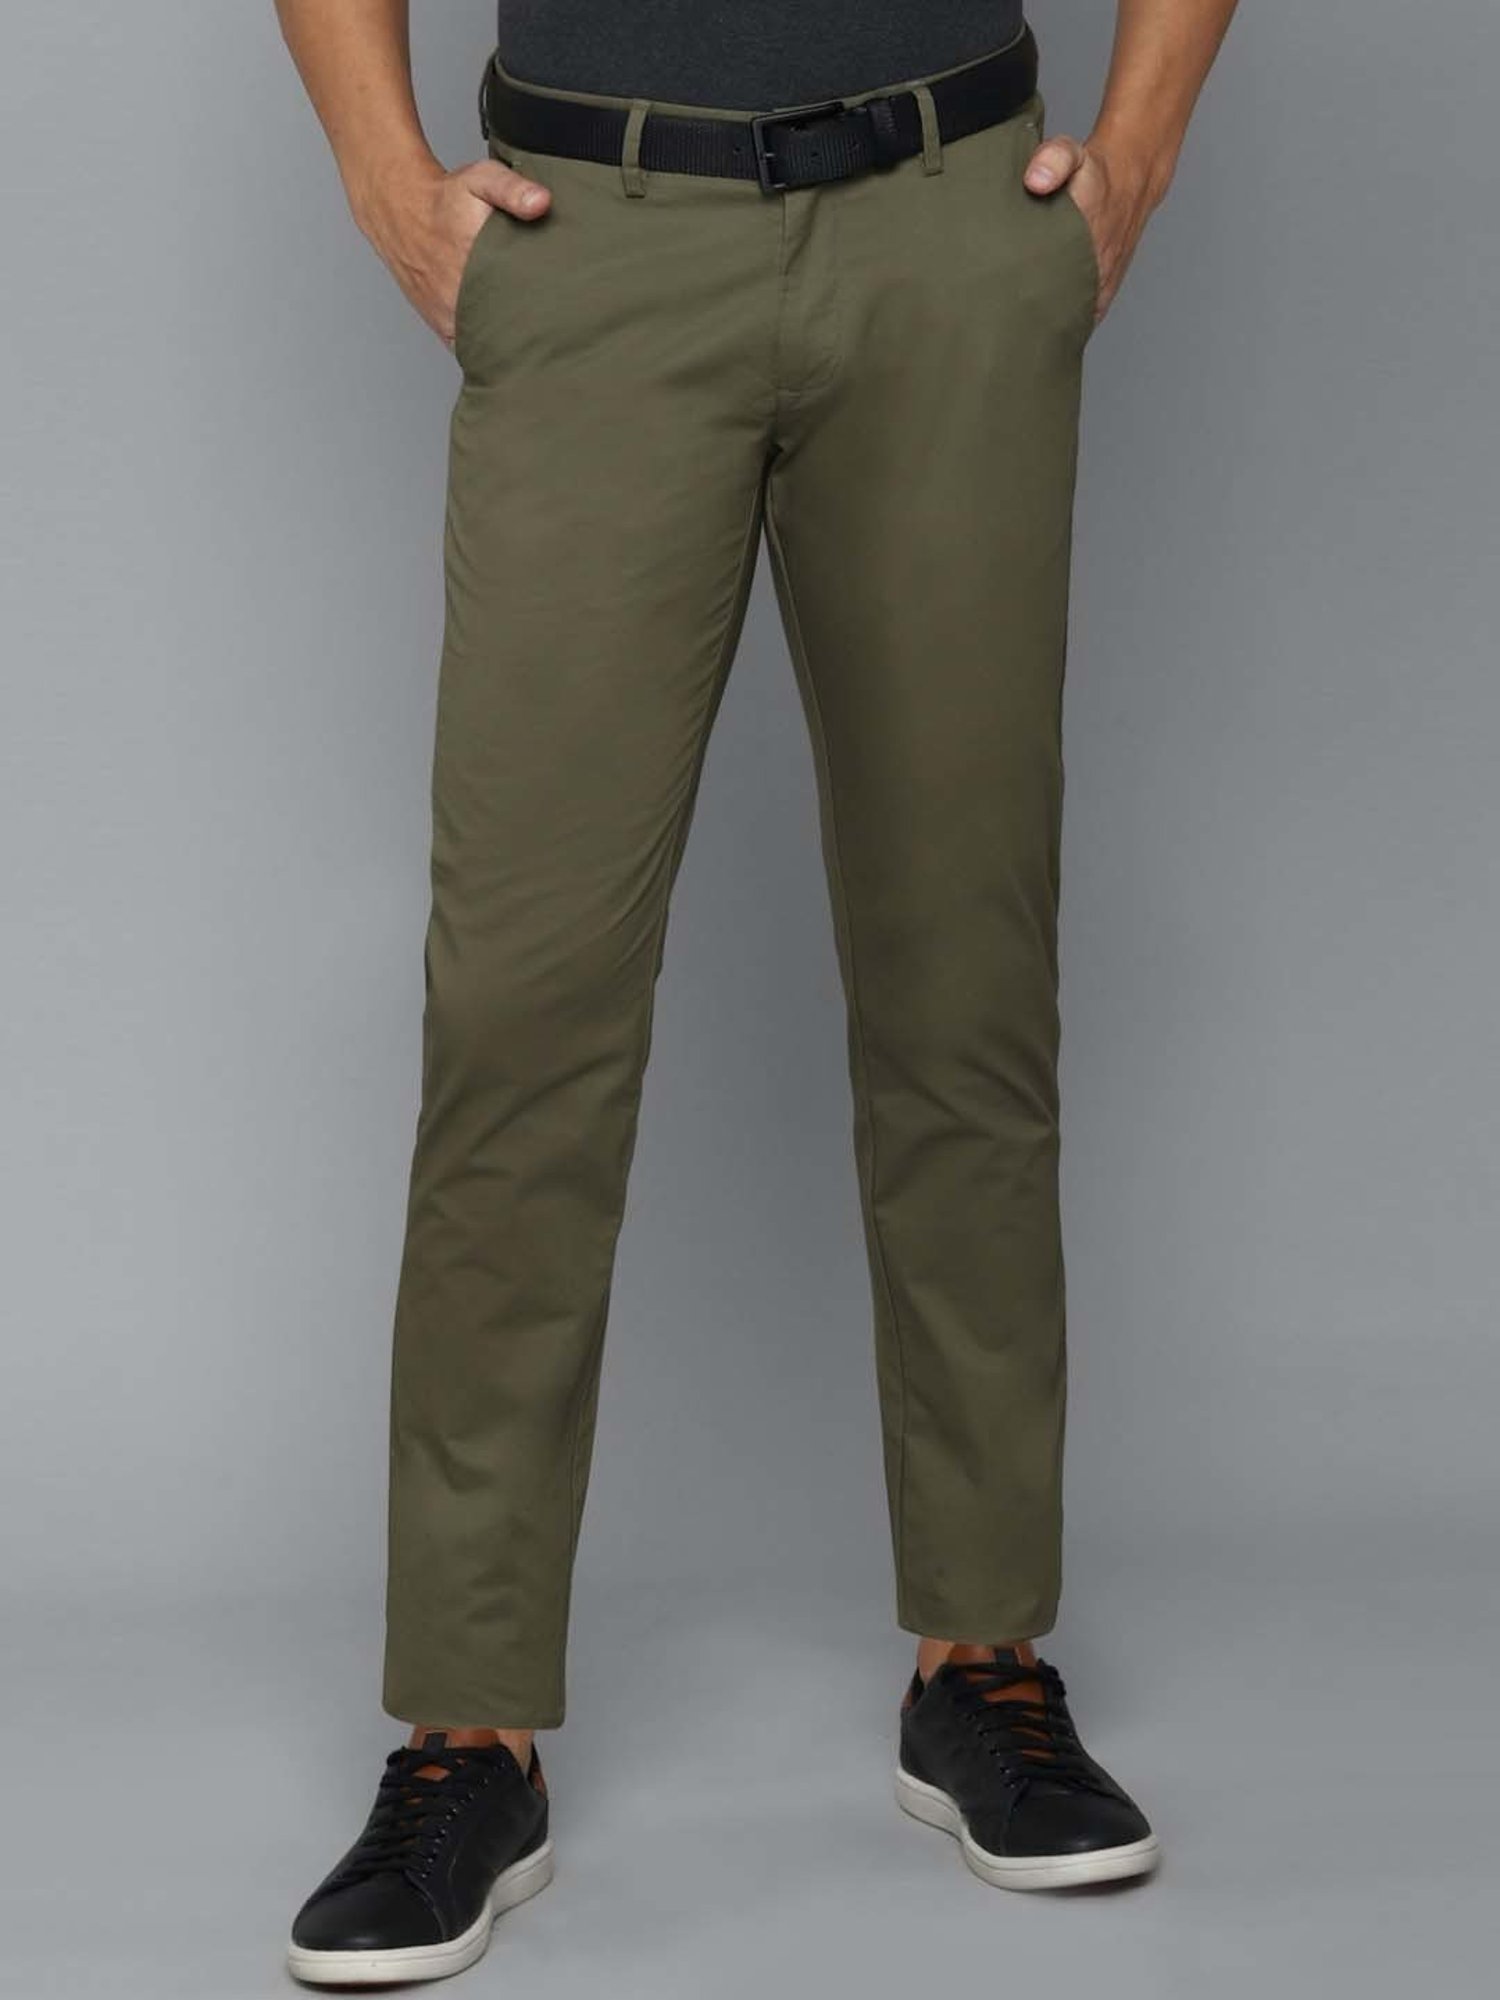 Men Clothing Pants Green | Black Green Mens Trousers | Green Clothes Men  Pants - Summer - Aliexpress